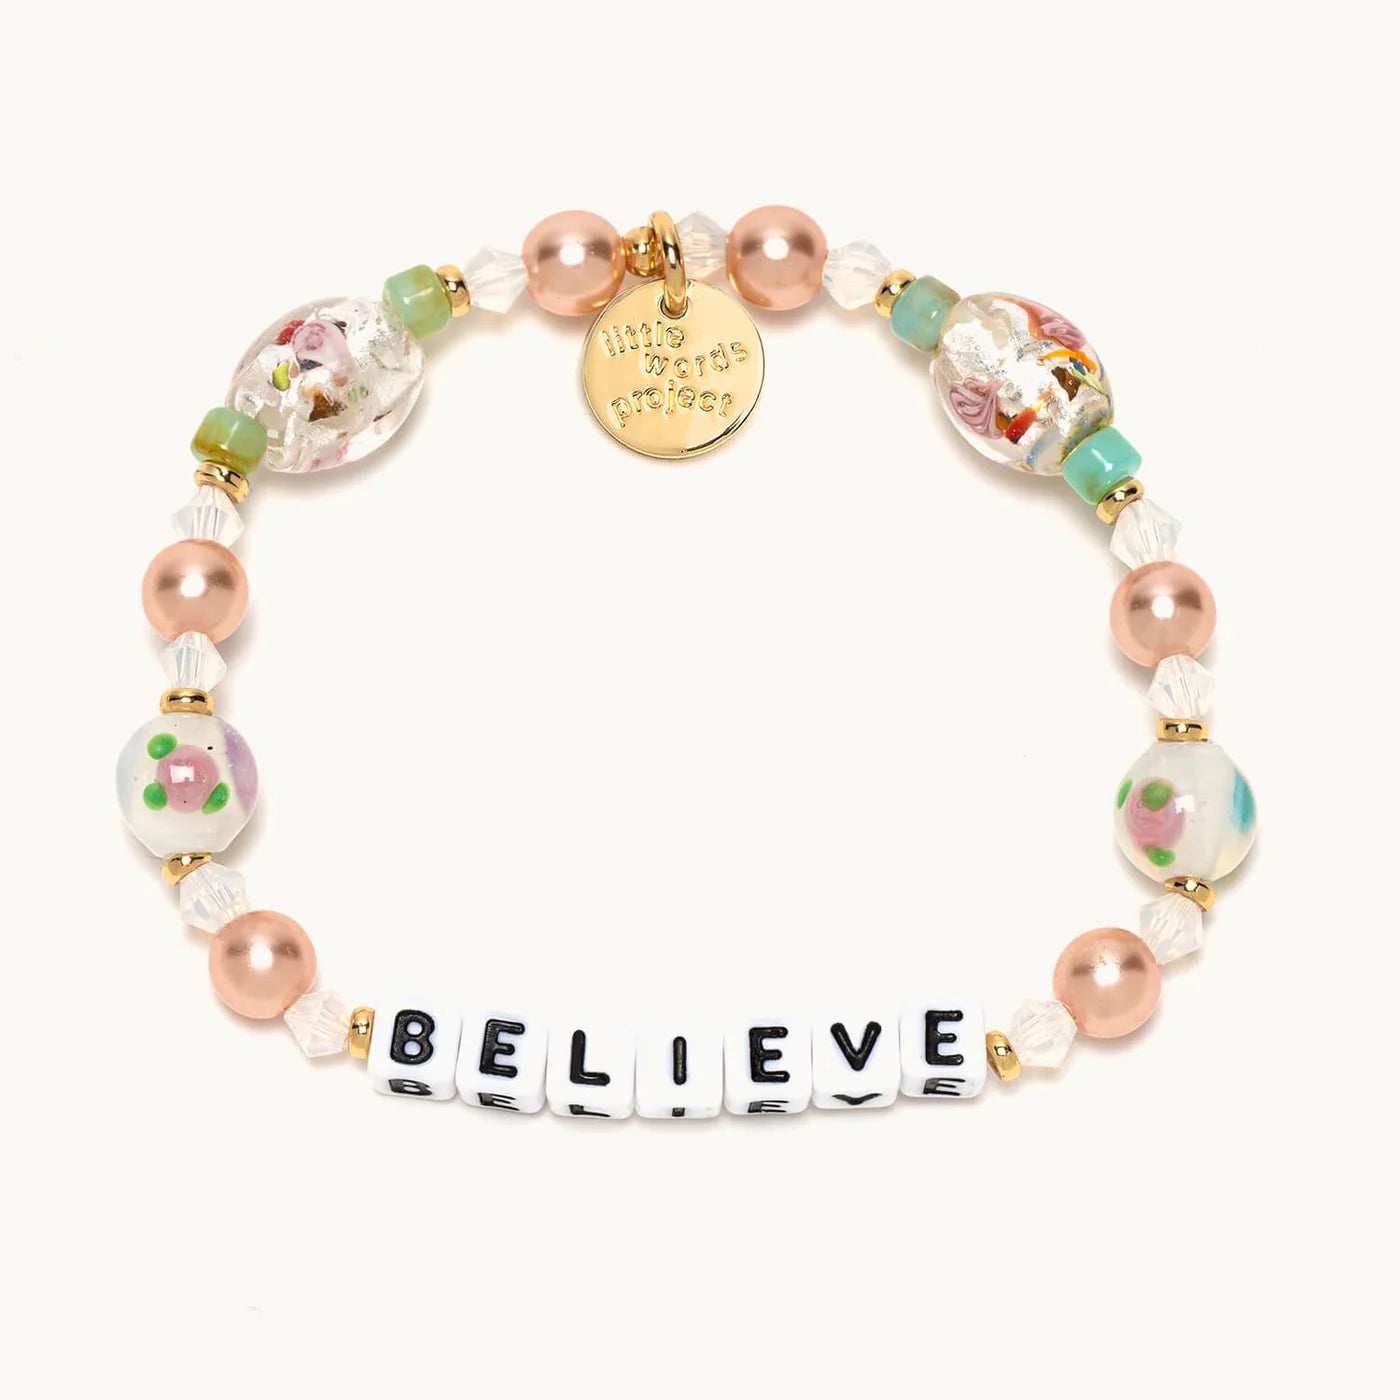 A beaded bracelet from Little Words Project® that reads "Believe".